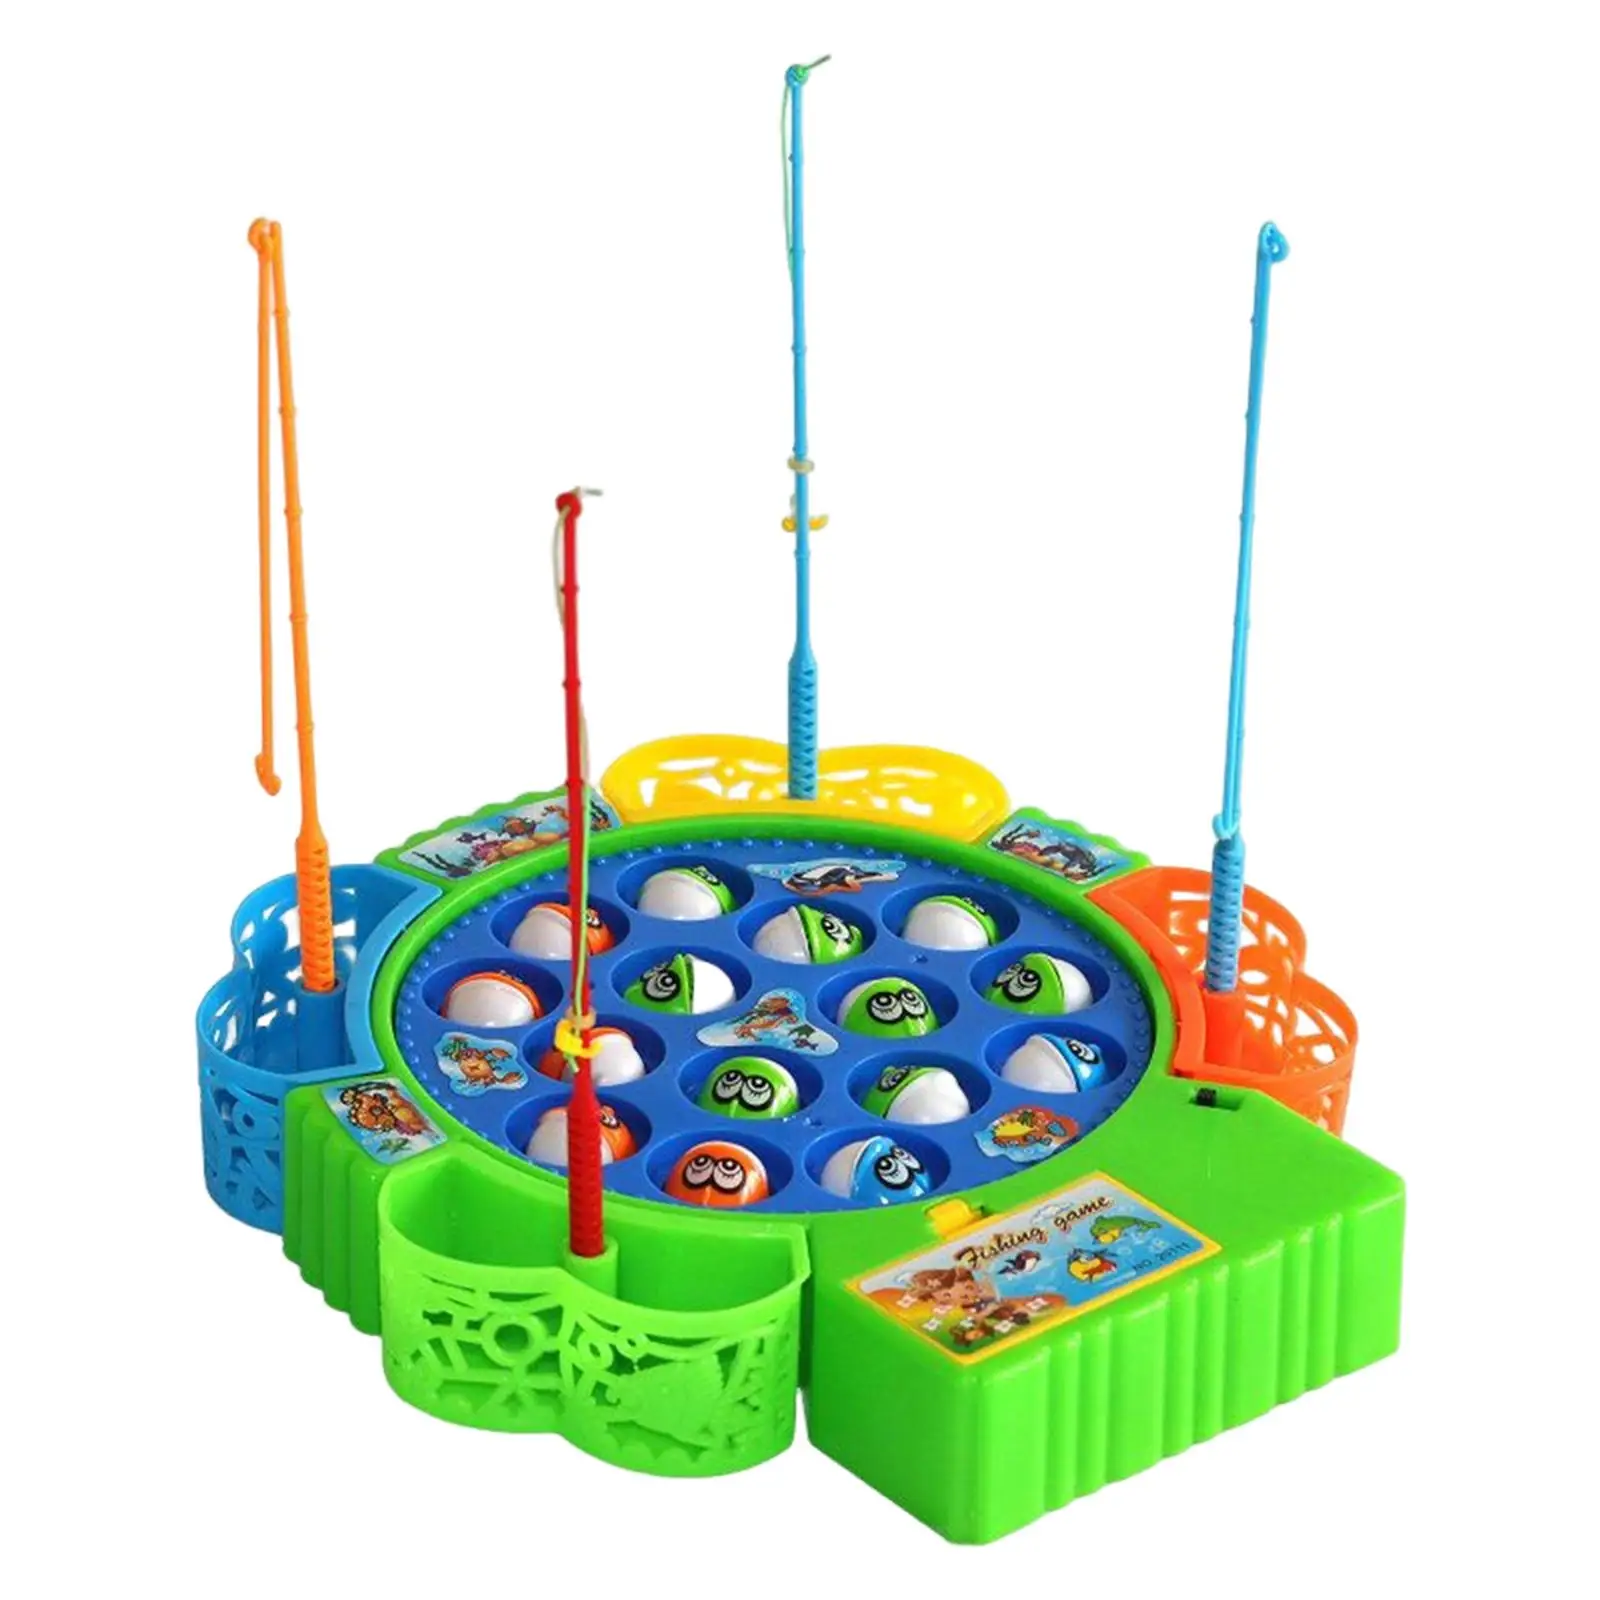 Montessori Rotating Fishing Game Kids toy, kids Fishing Toy for Kids Children